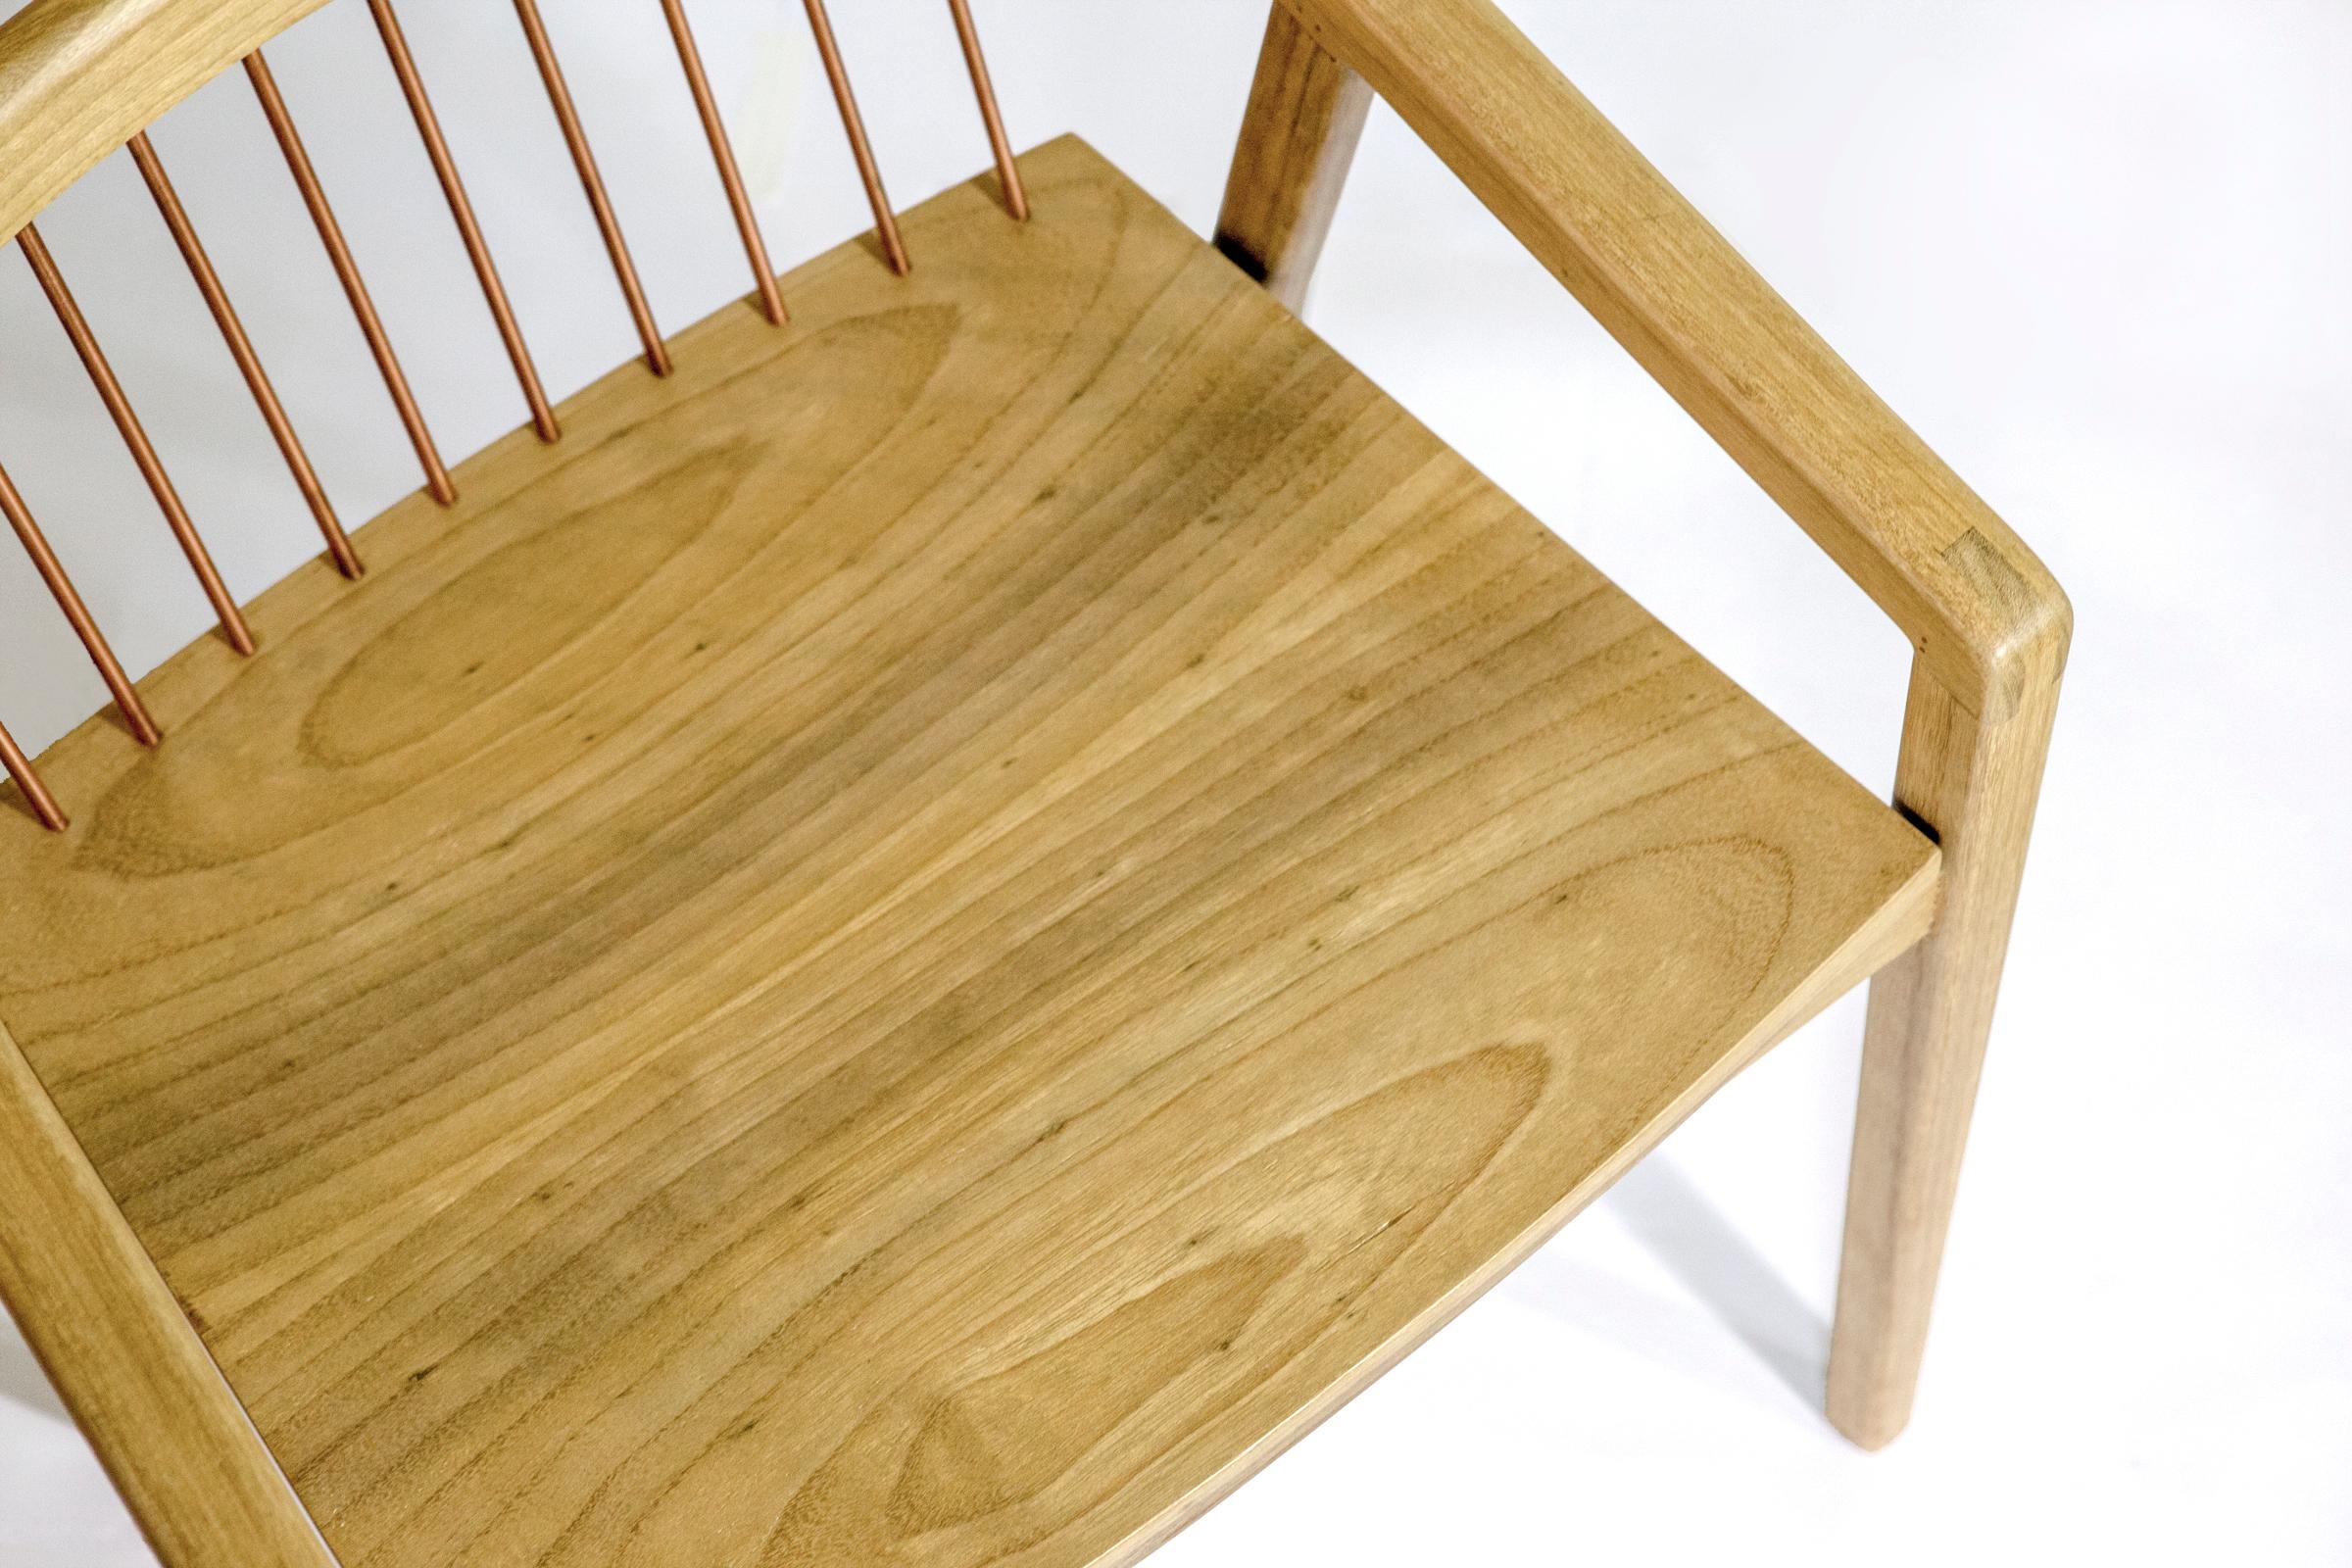 'Canelinha' Mid-Century Modern Chair in Brazilian Hardwood by Knót Artesanal For Sale 1